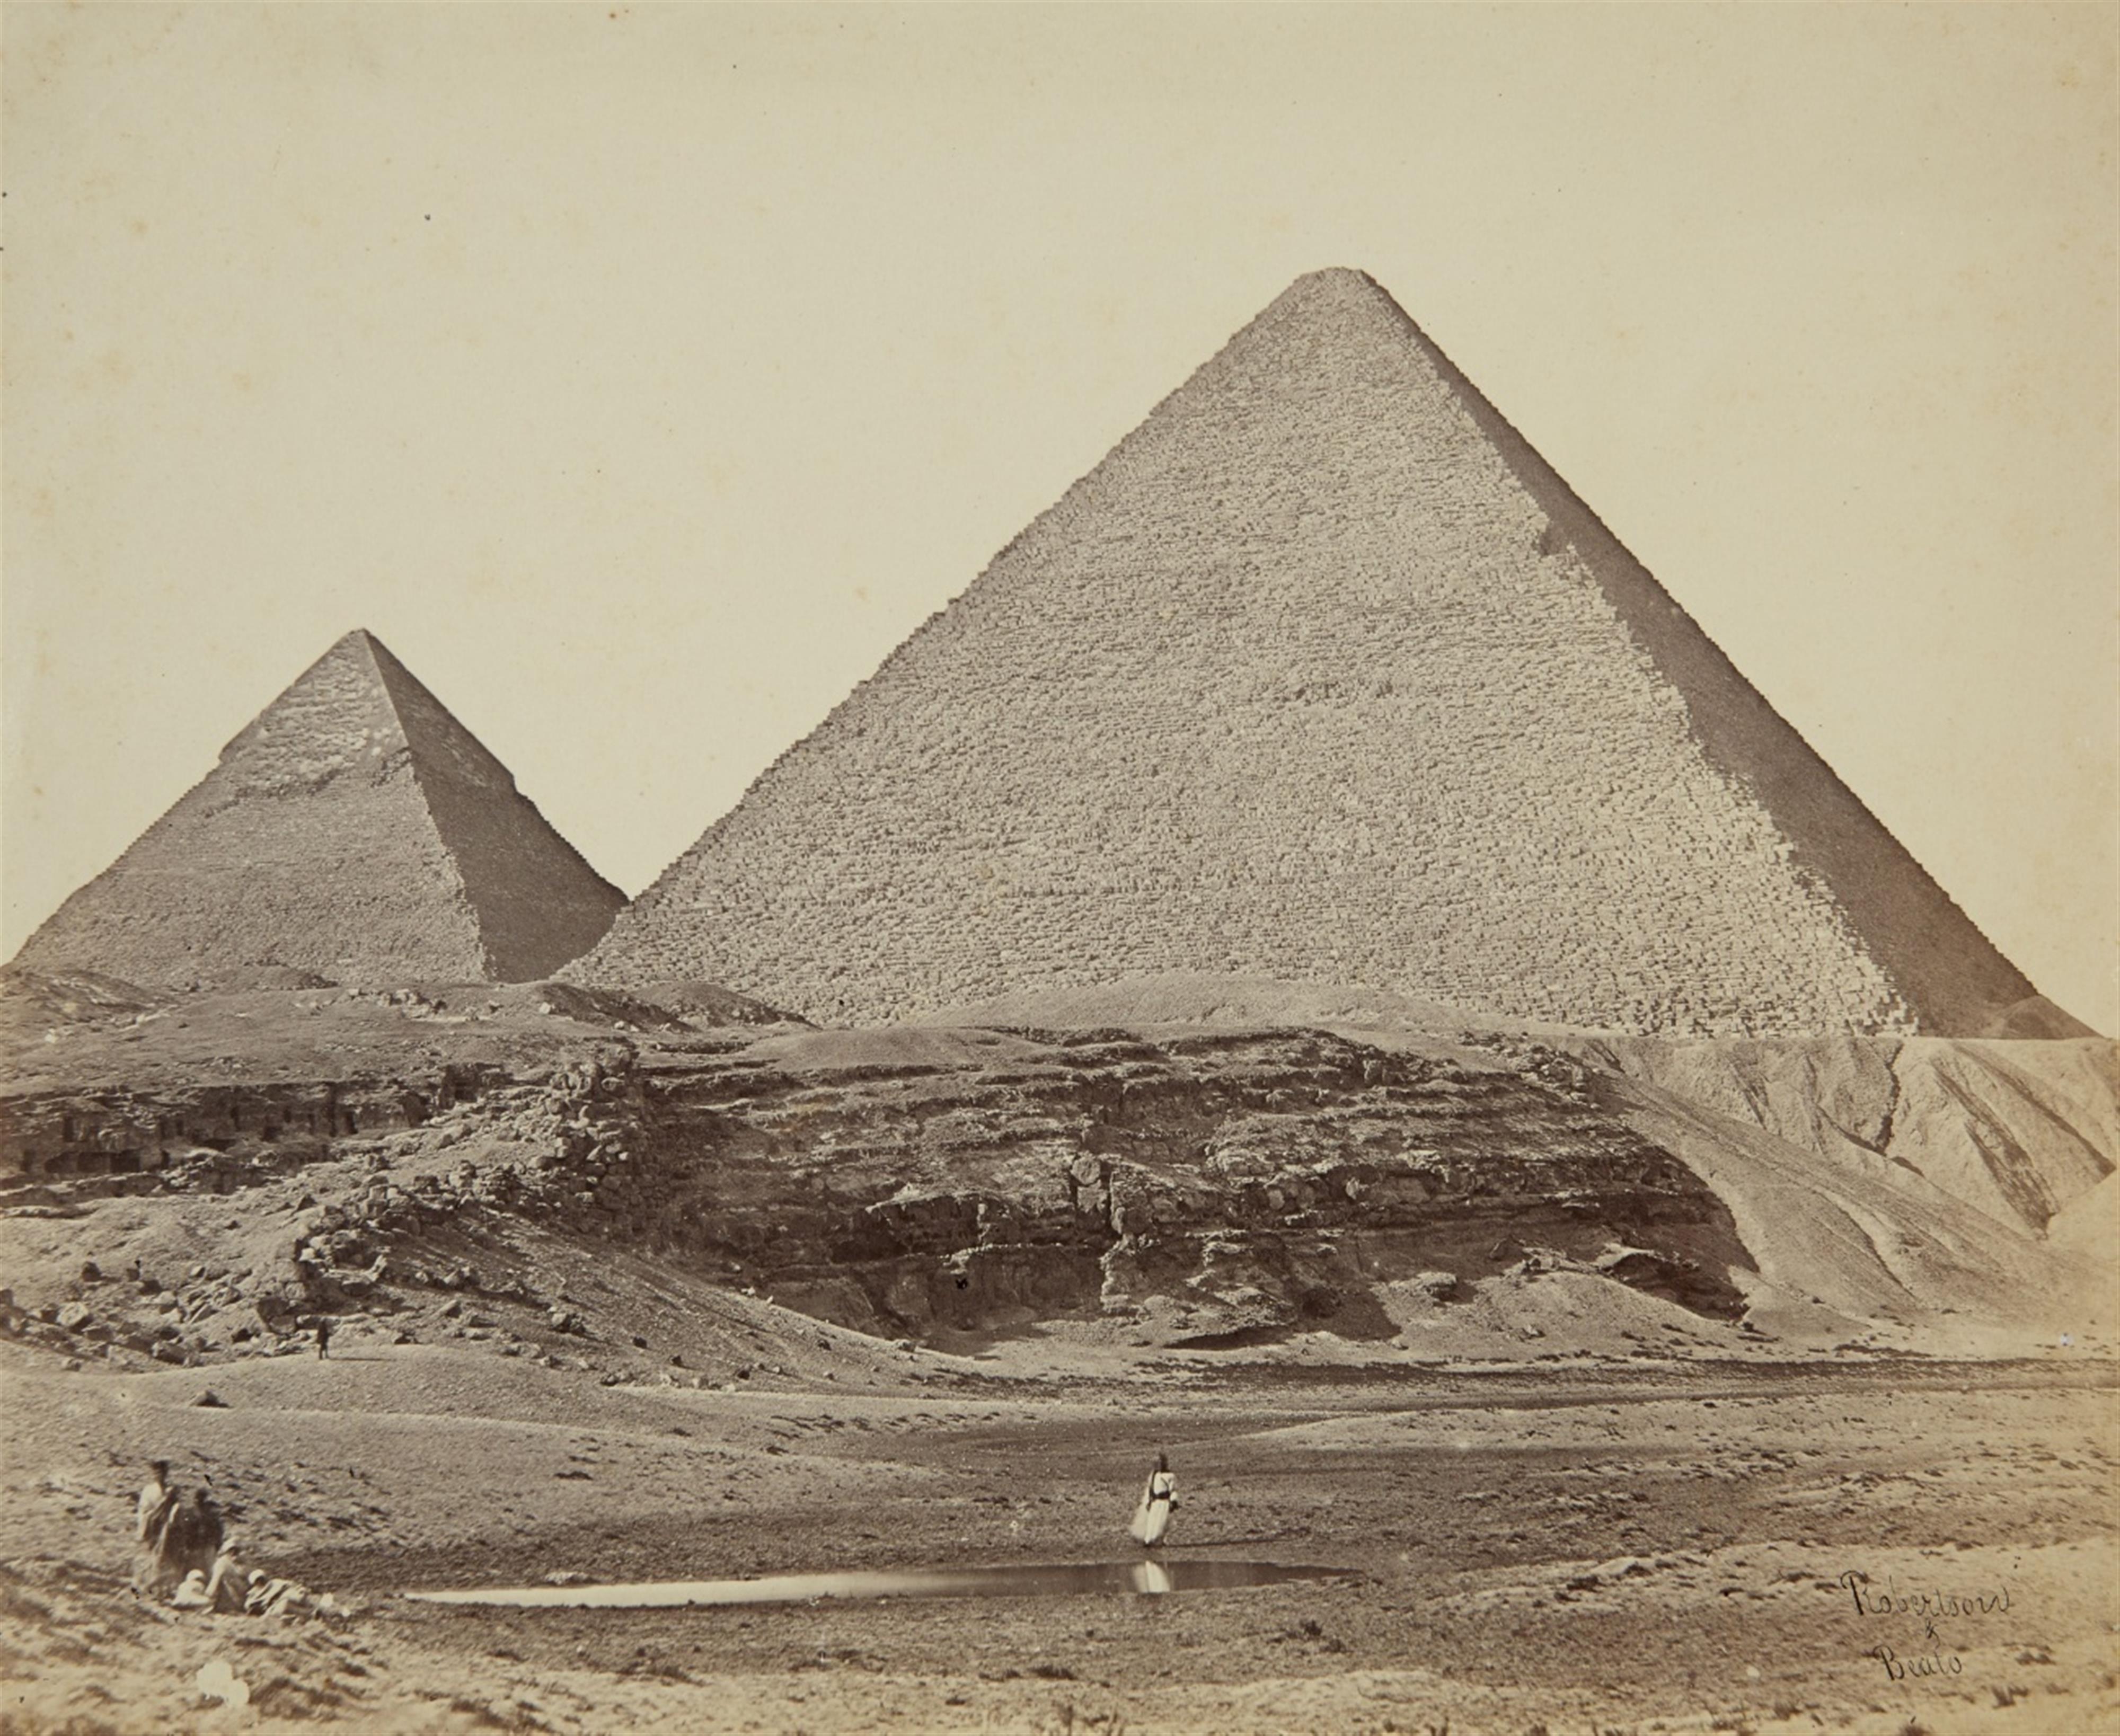 James Robertson
Felice Beato - Pyramids of Gizeh, Egypt - image-1